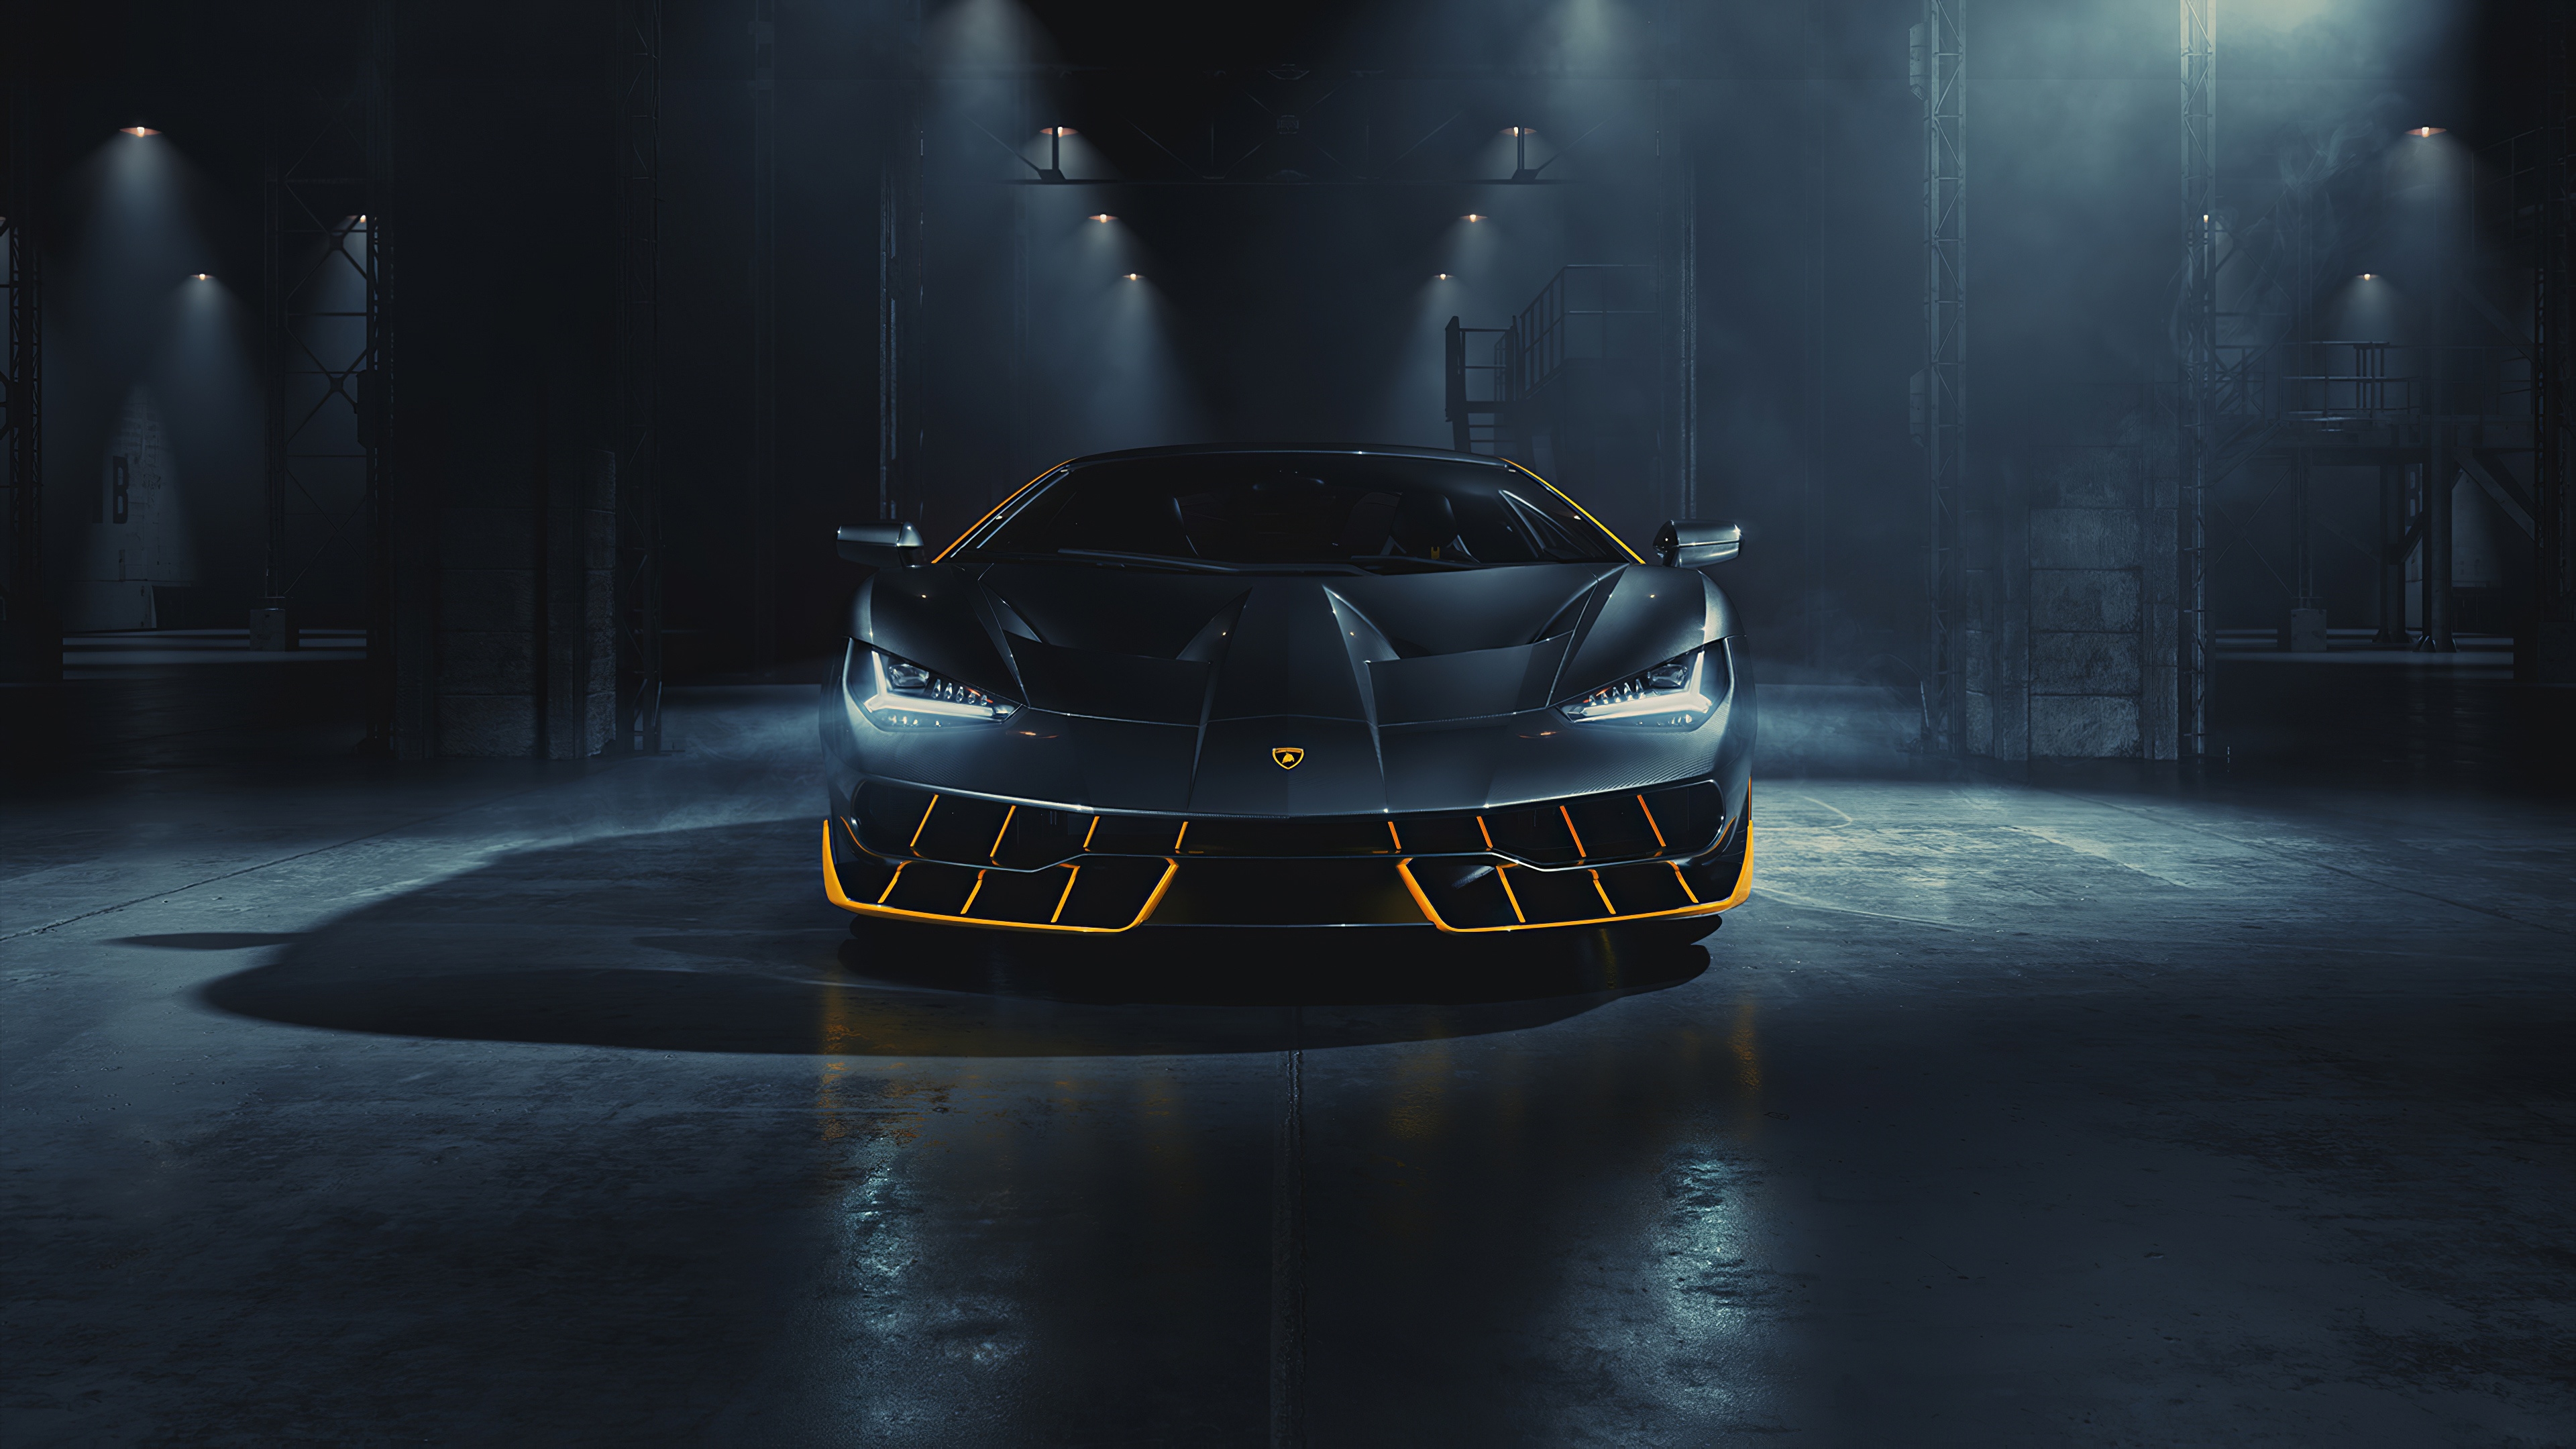 Download 1280x1024 Lamborghini Centenario, Front View, Black Supercars Wallpaper